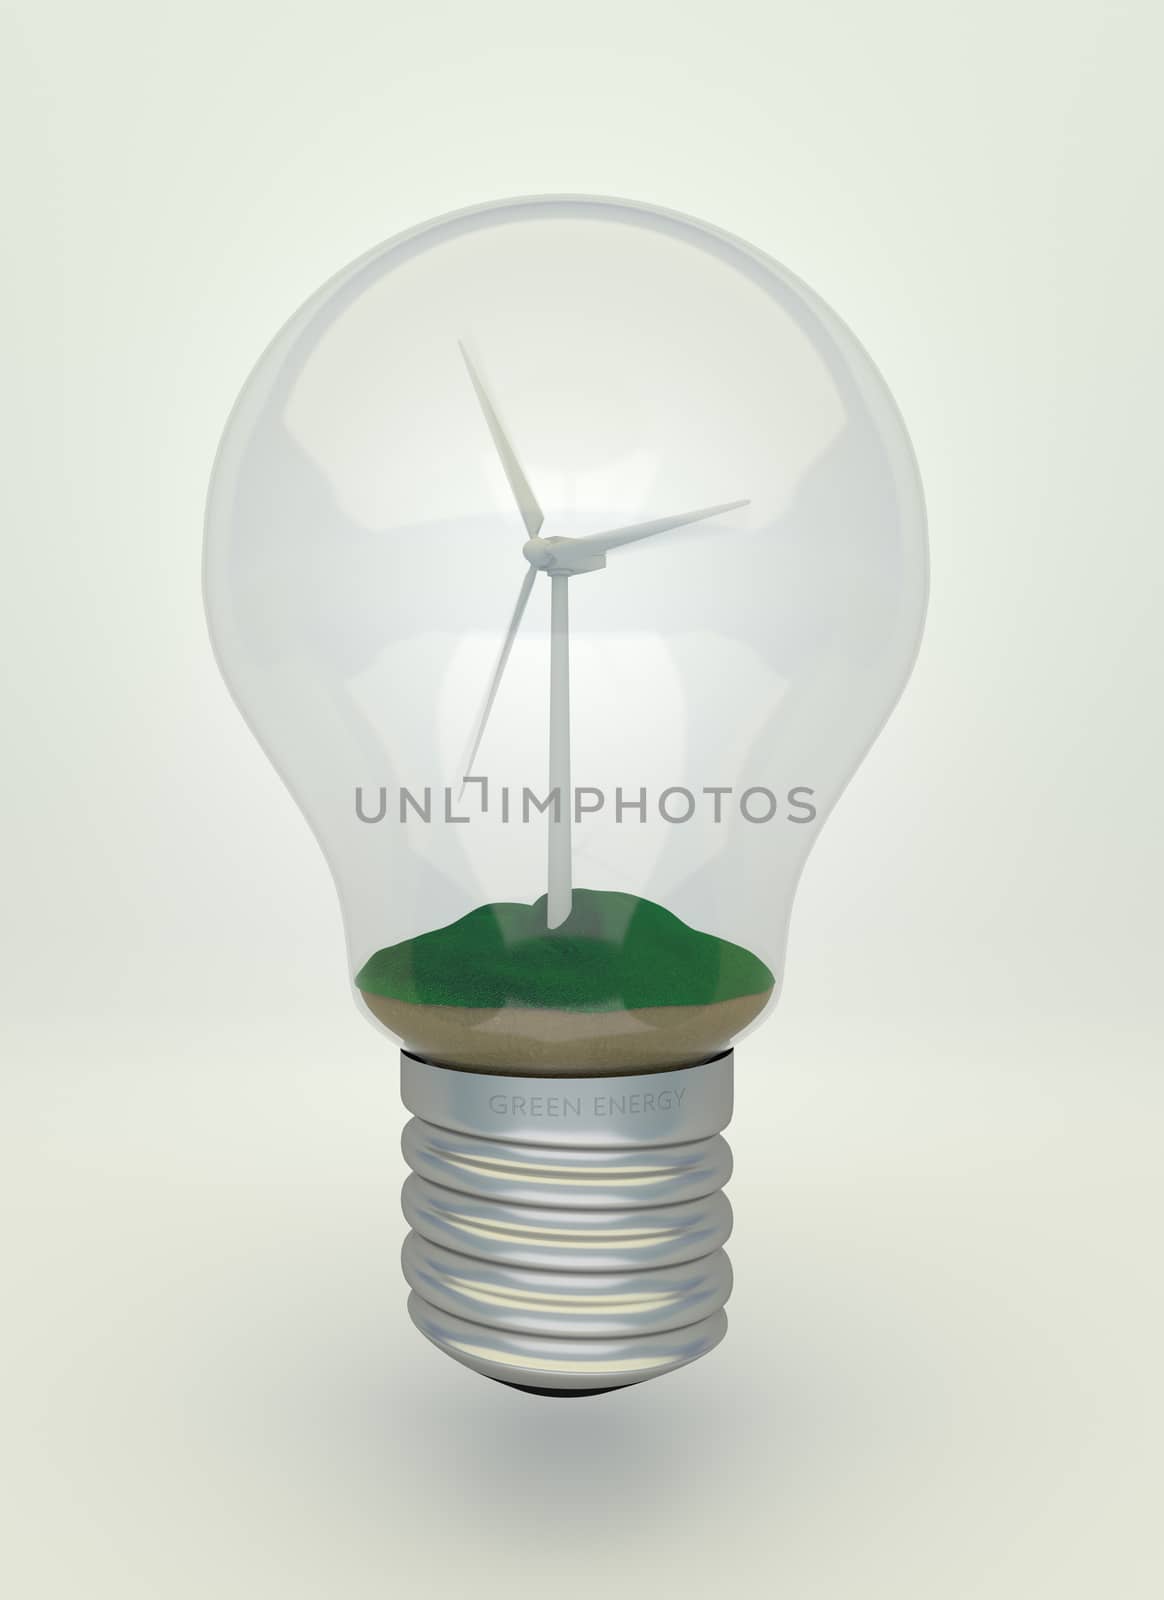  Wind turbine on the grass inside light bulb, eco light bulb